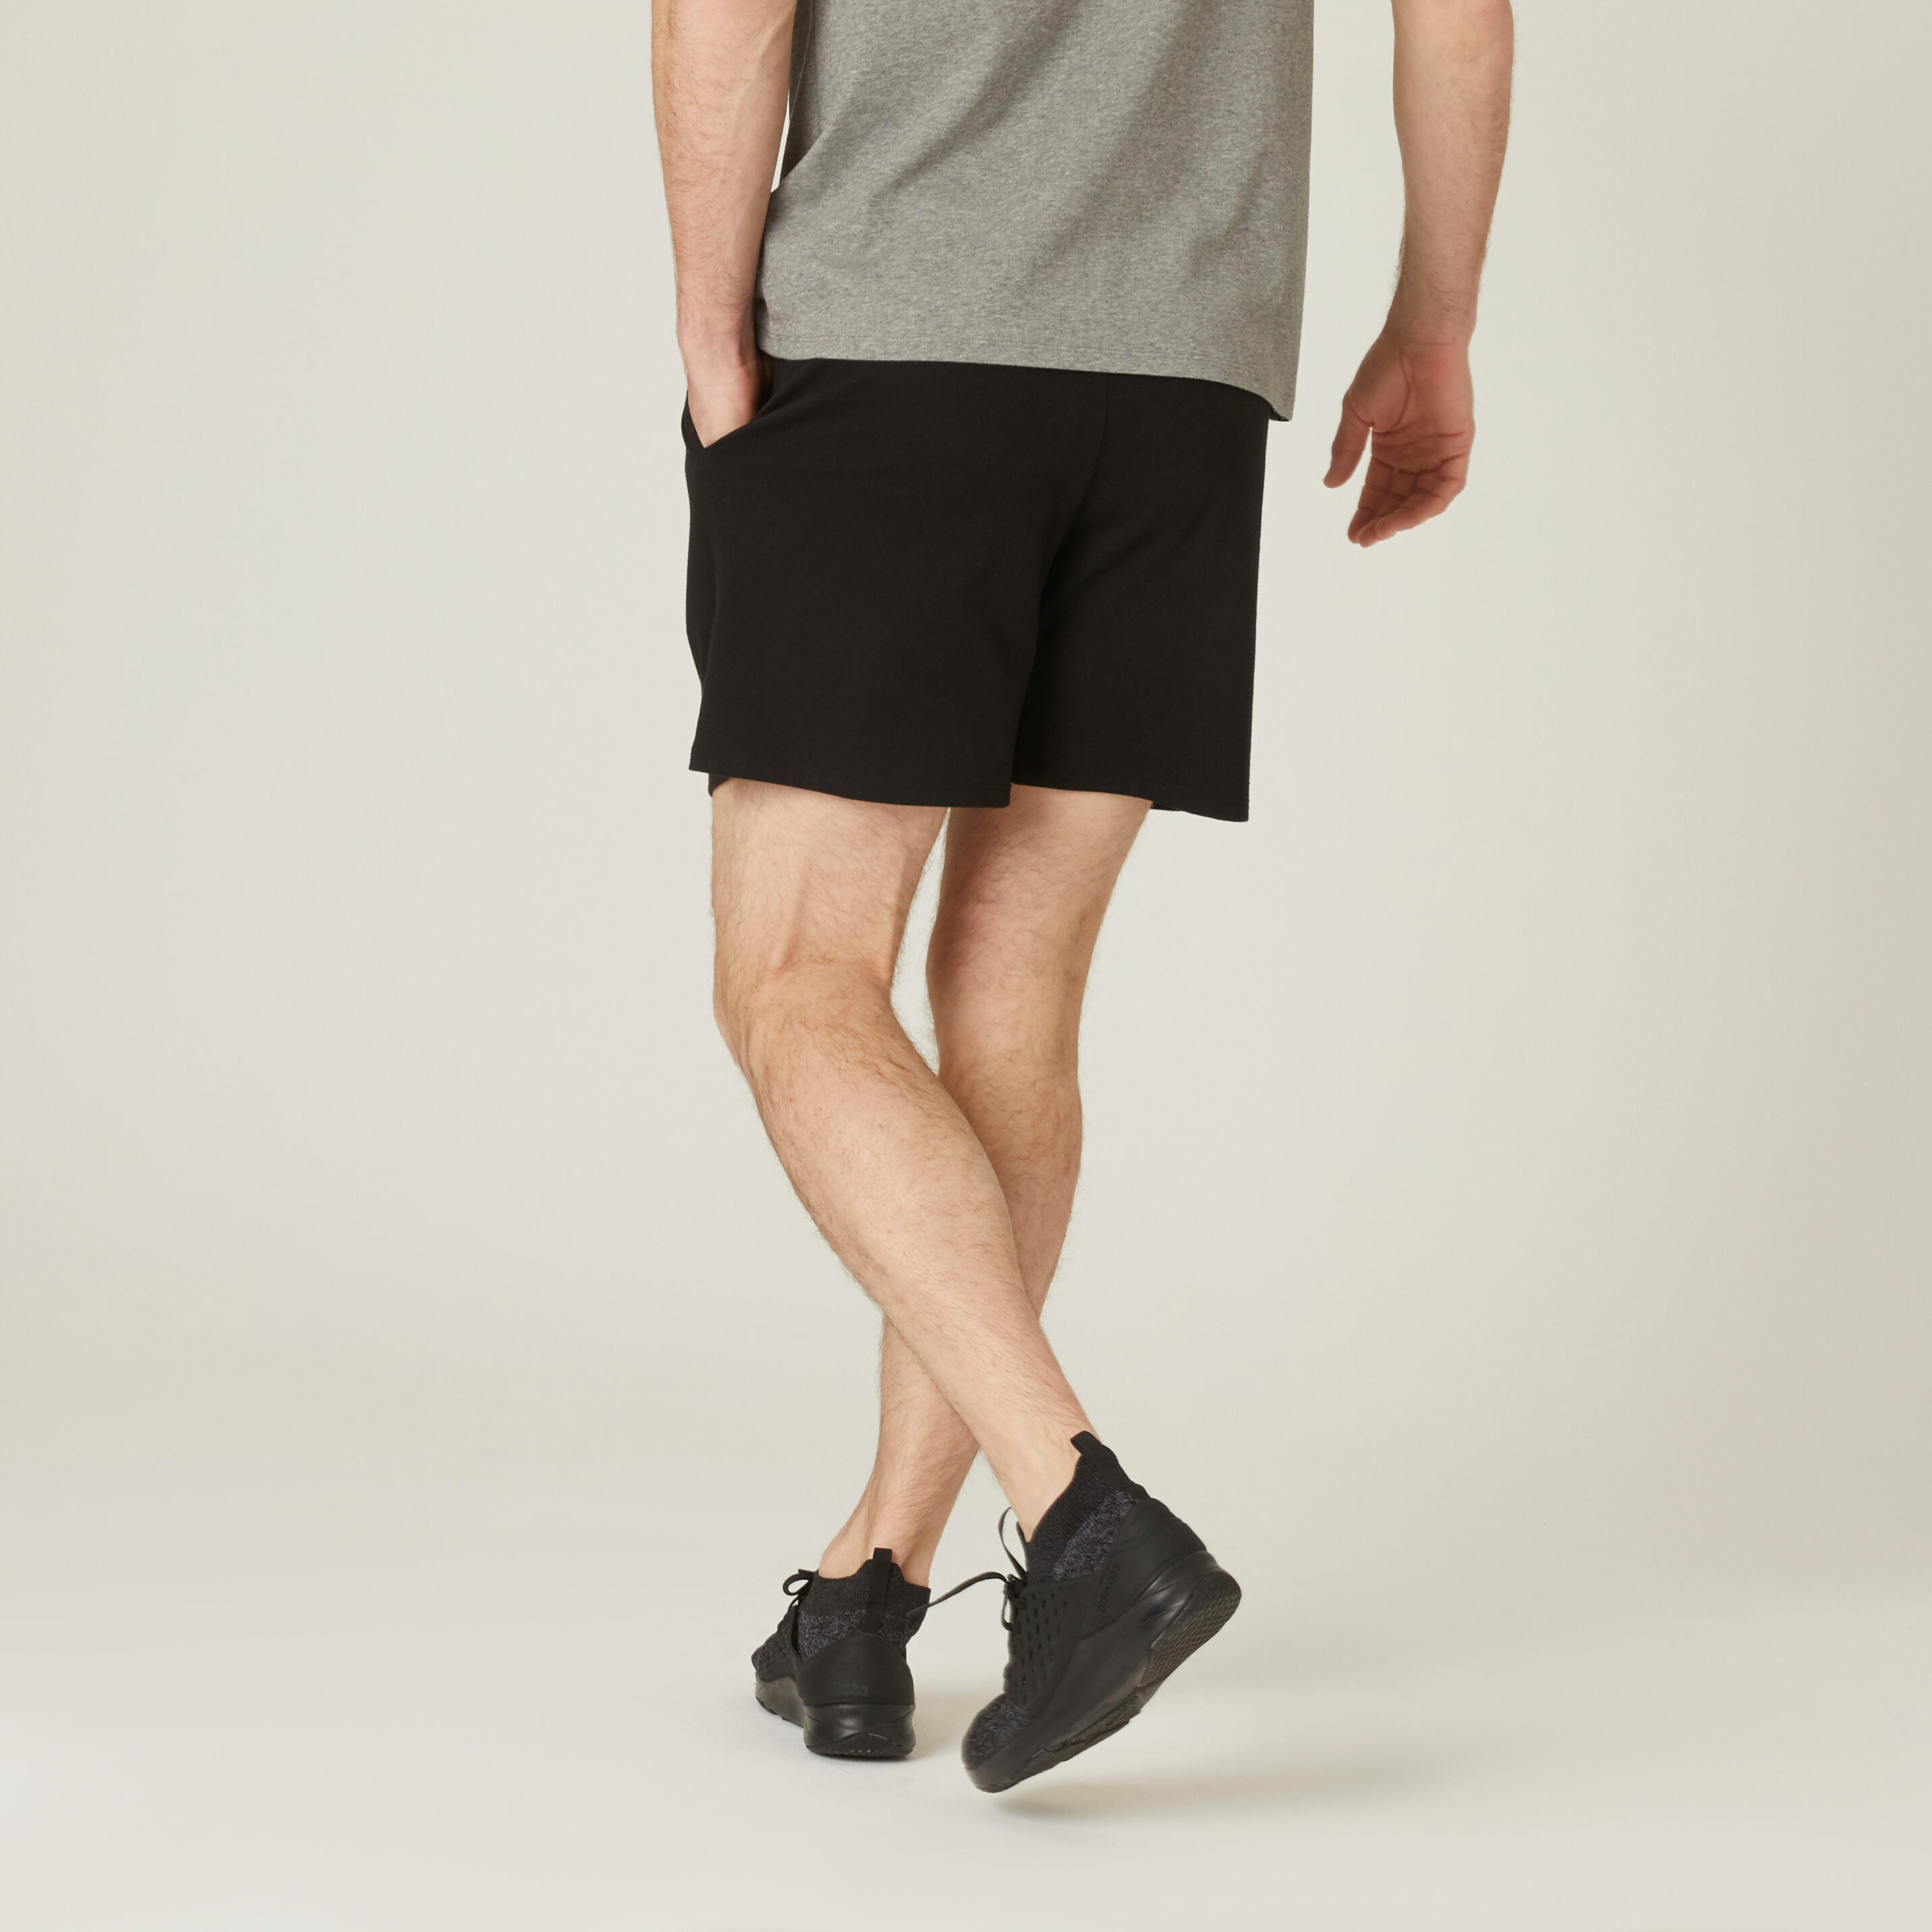 Men's Fitness Short Shorts 100 - Black 2/5